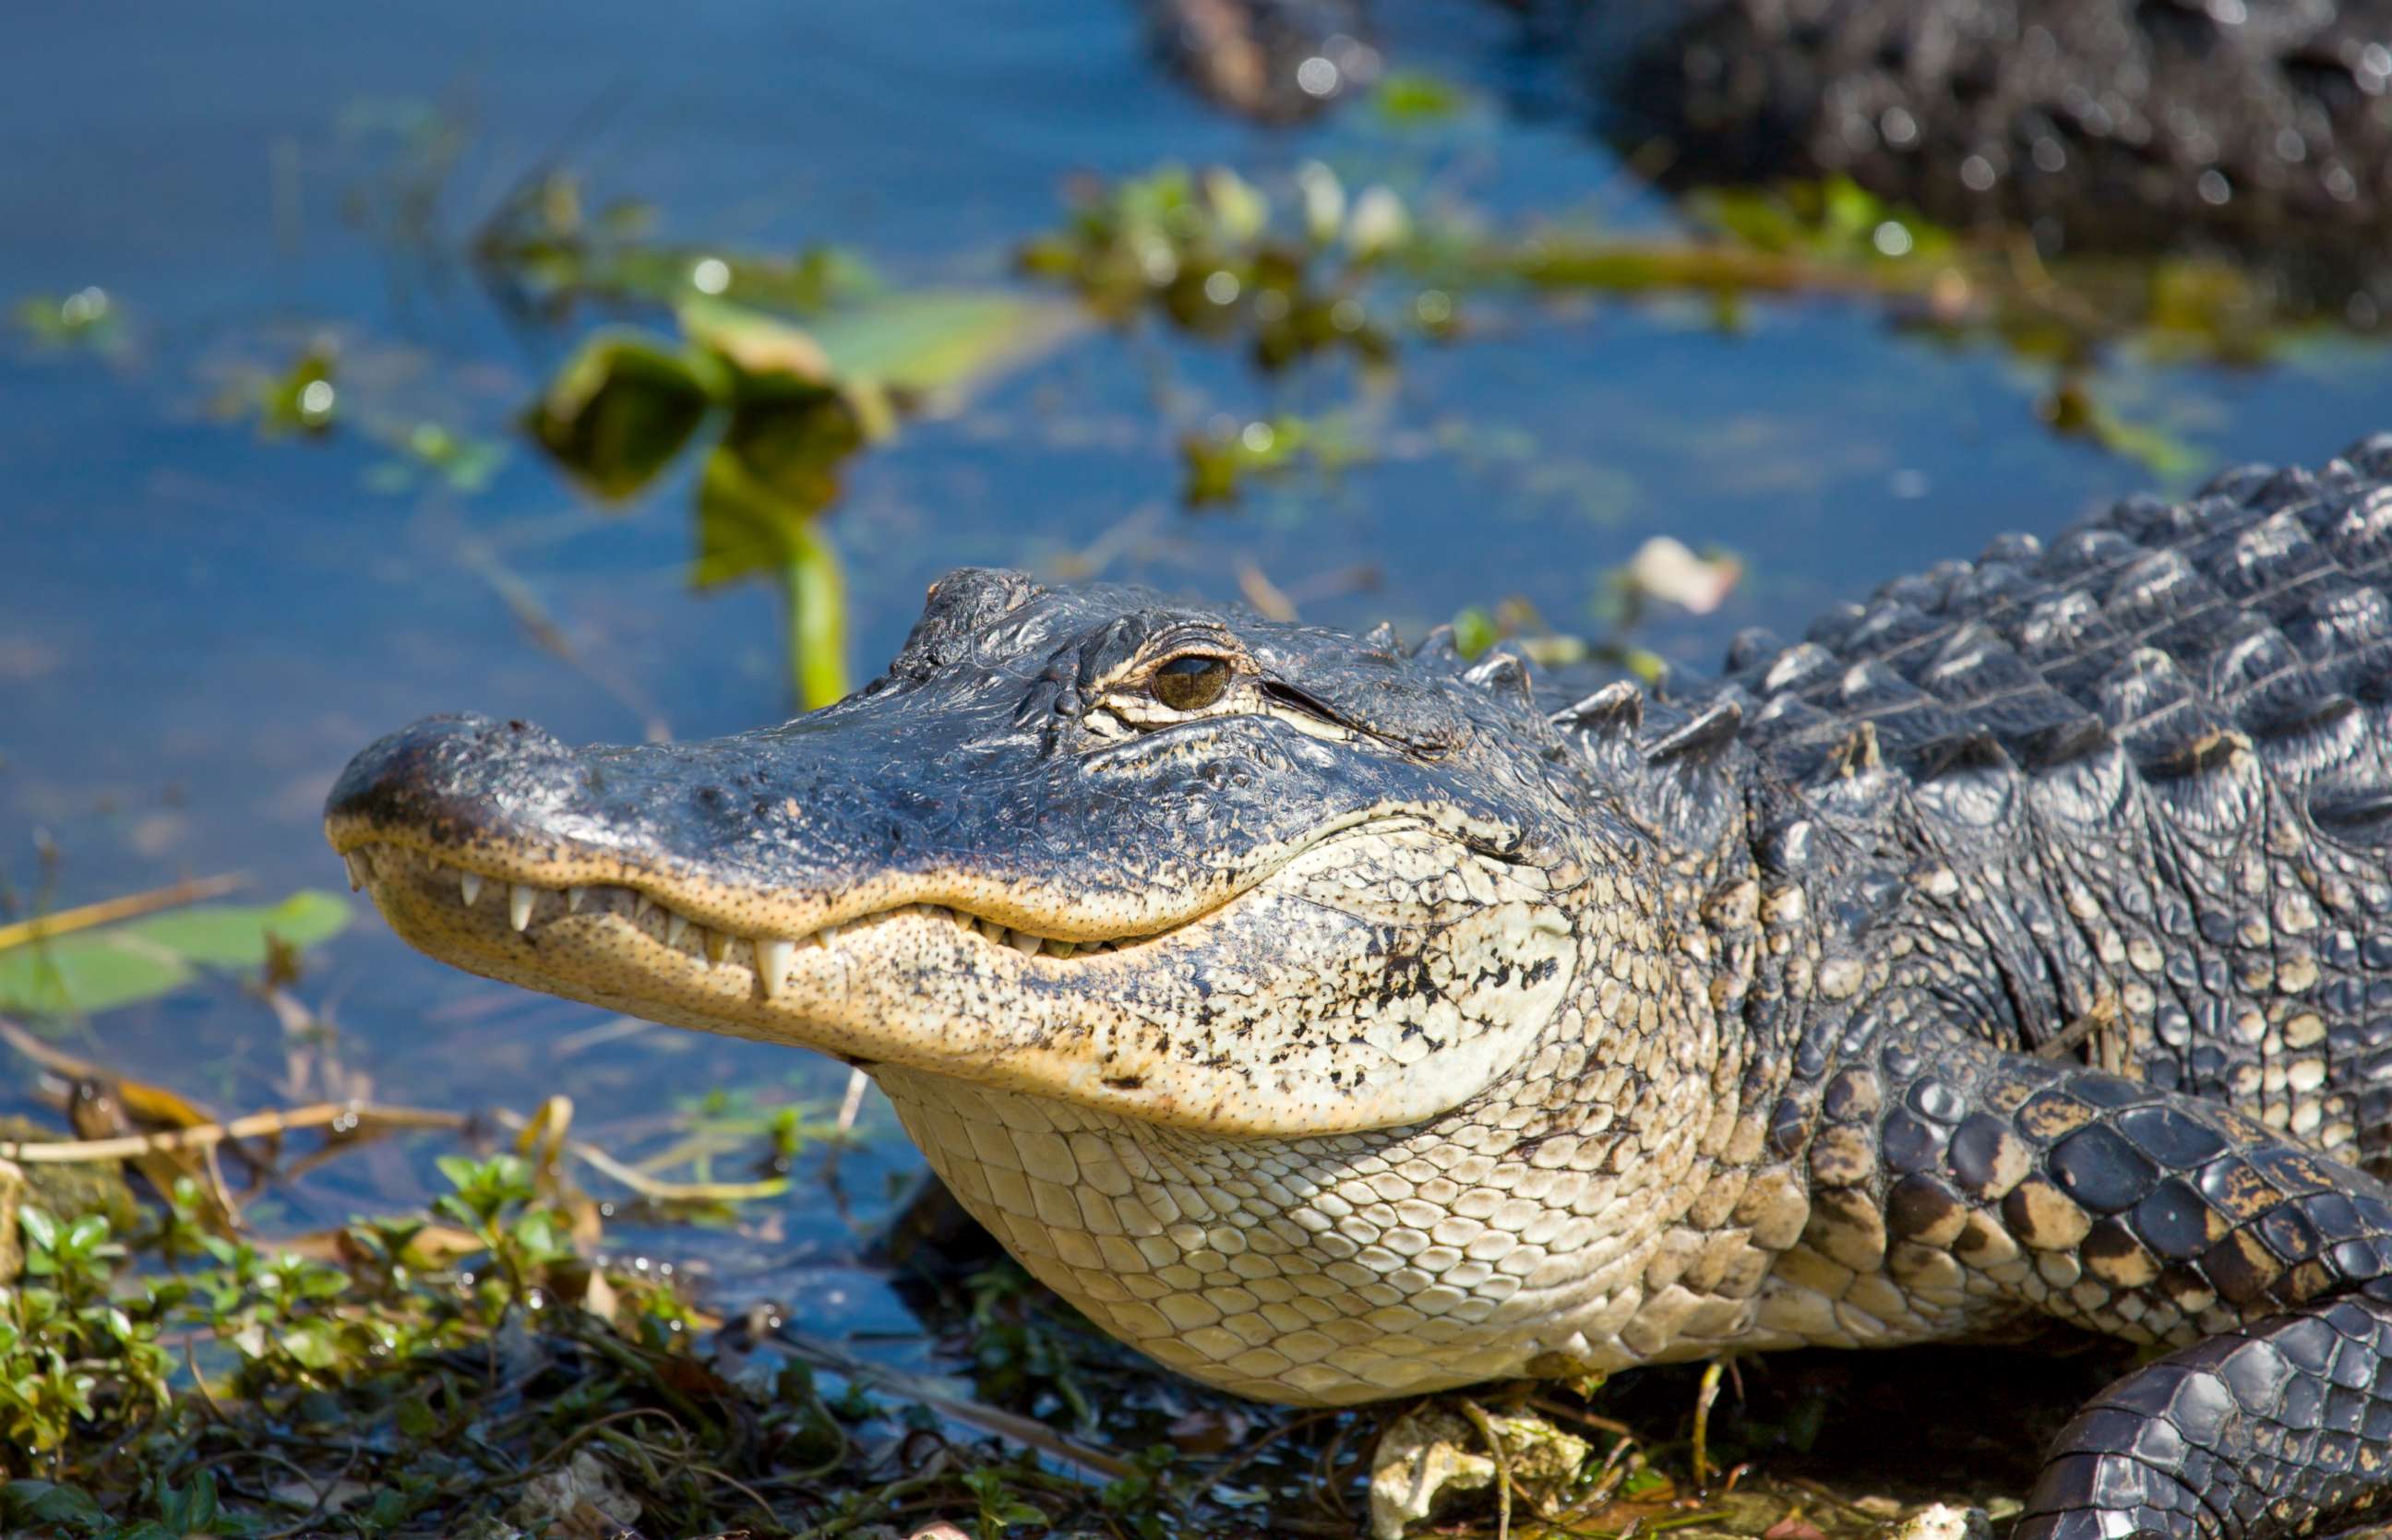 PHOTO: An alligator in Florida.